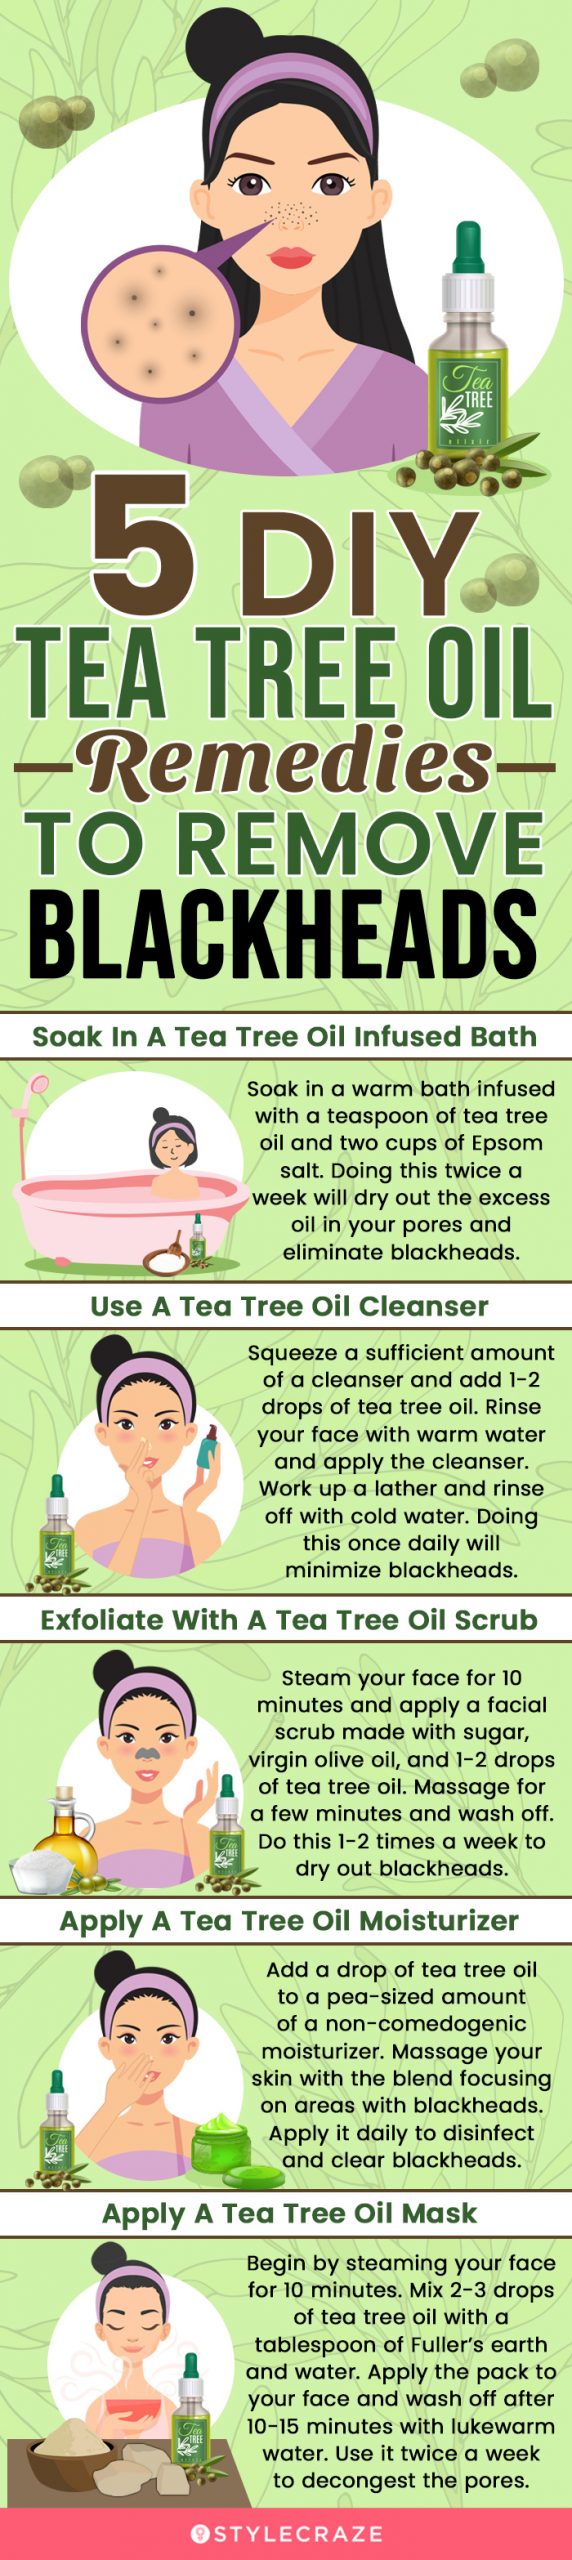 5 diy tea tree oil remedies to remove blackheads (infographic)